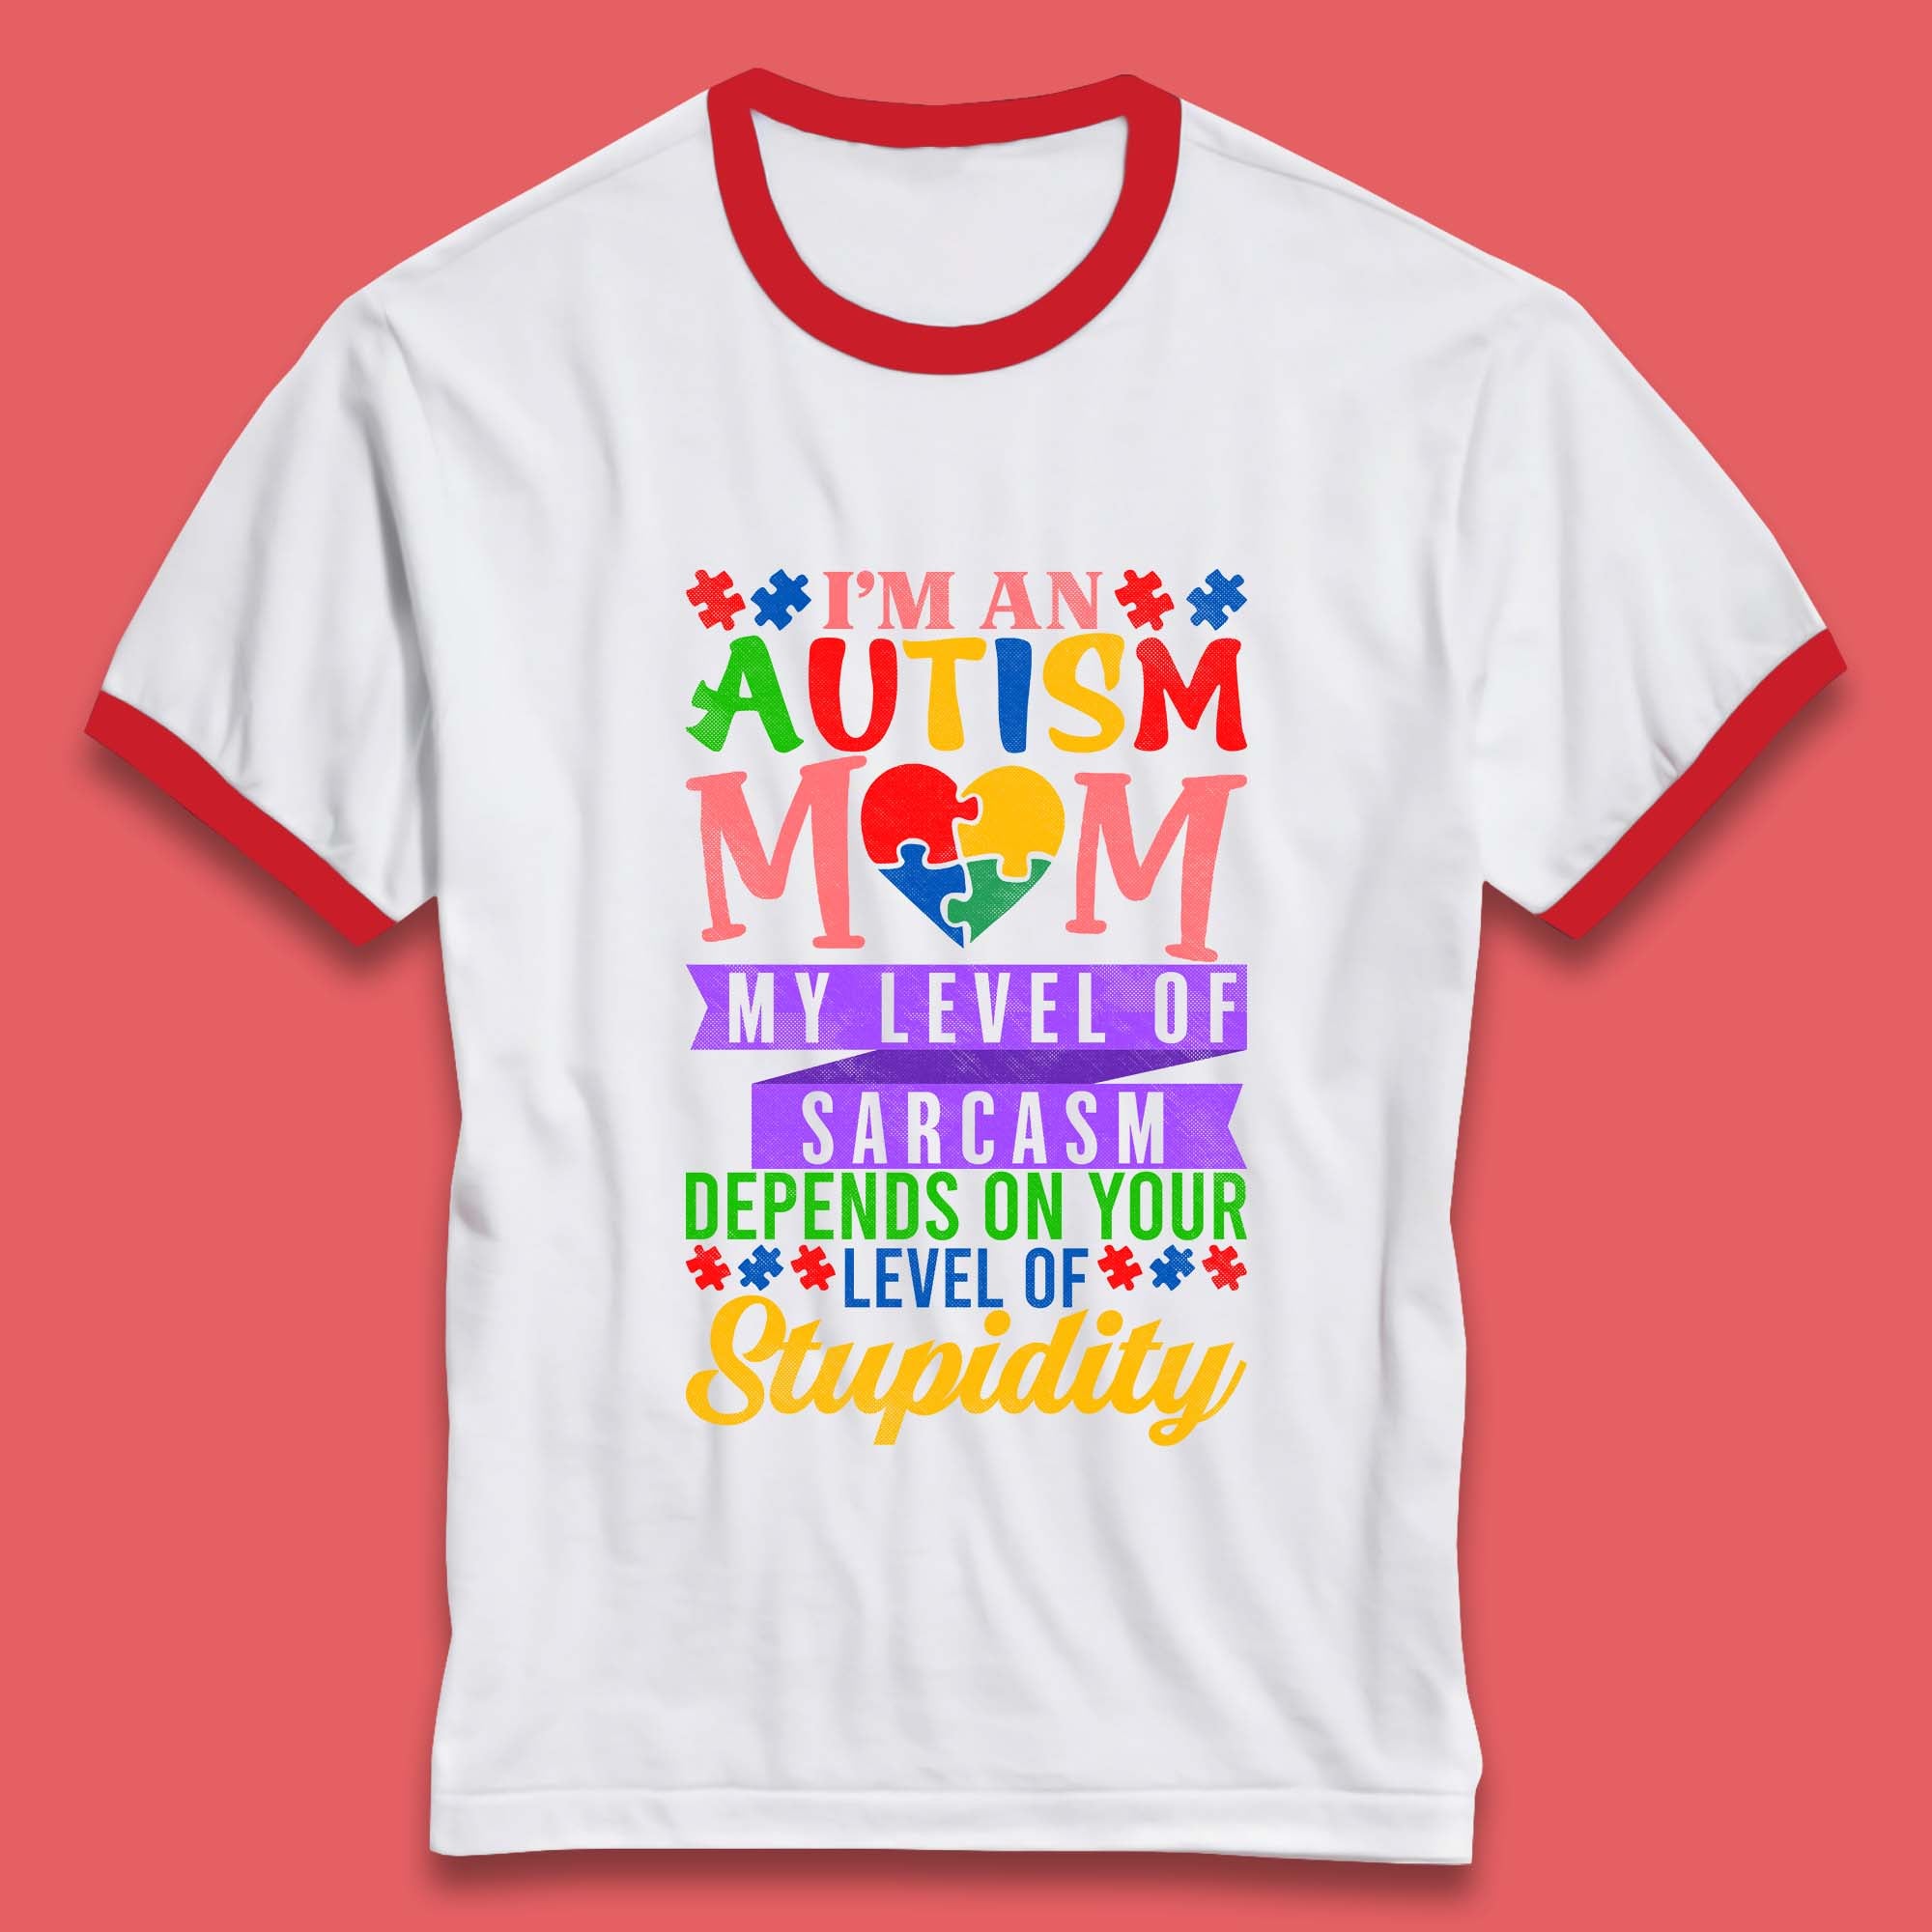 Autism Mom Humor Ringer T-Shirt